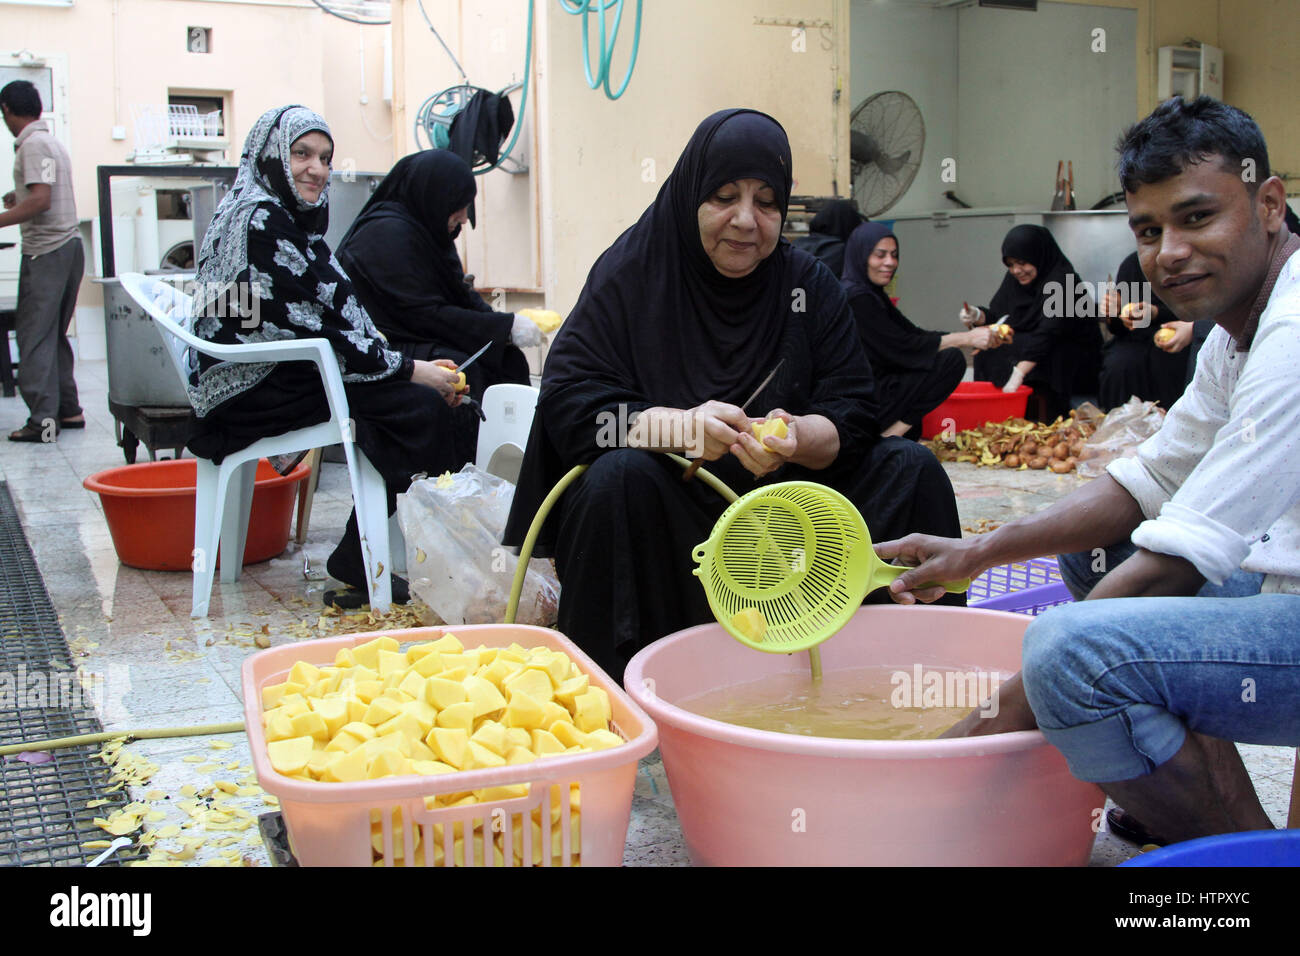 Members of Bahrain's Shia community preparing food for a communal meal. Stock Photo